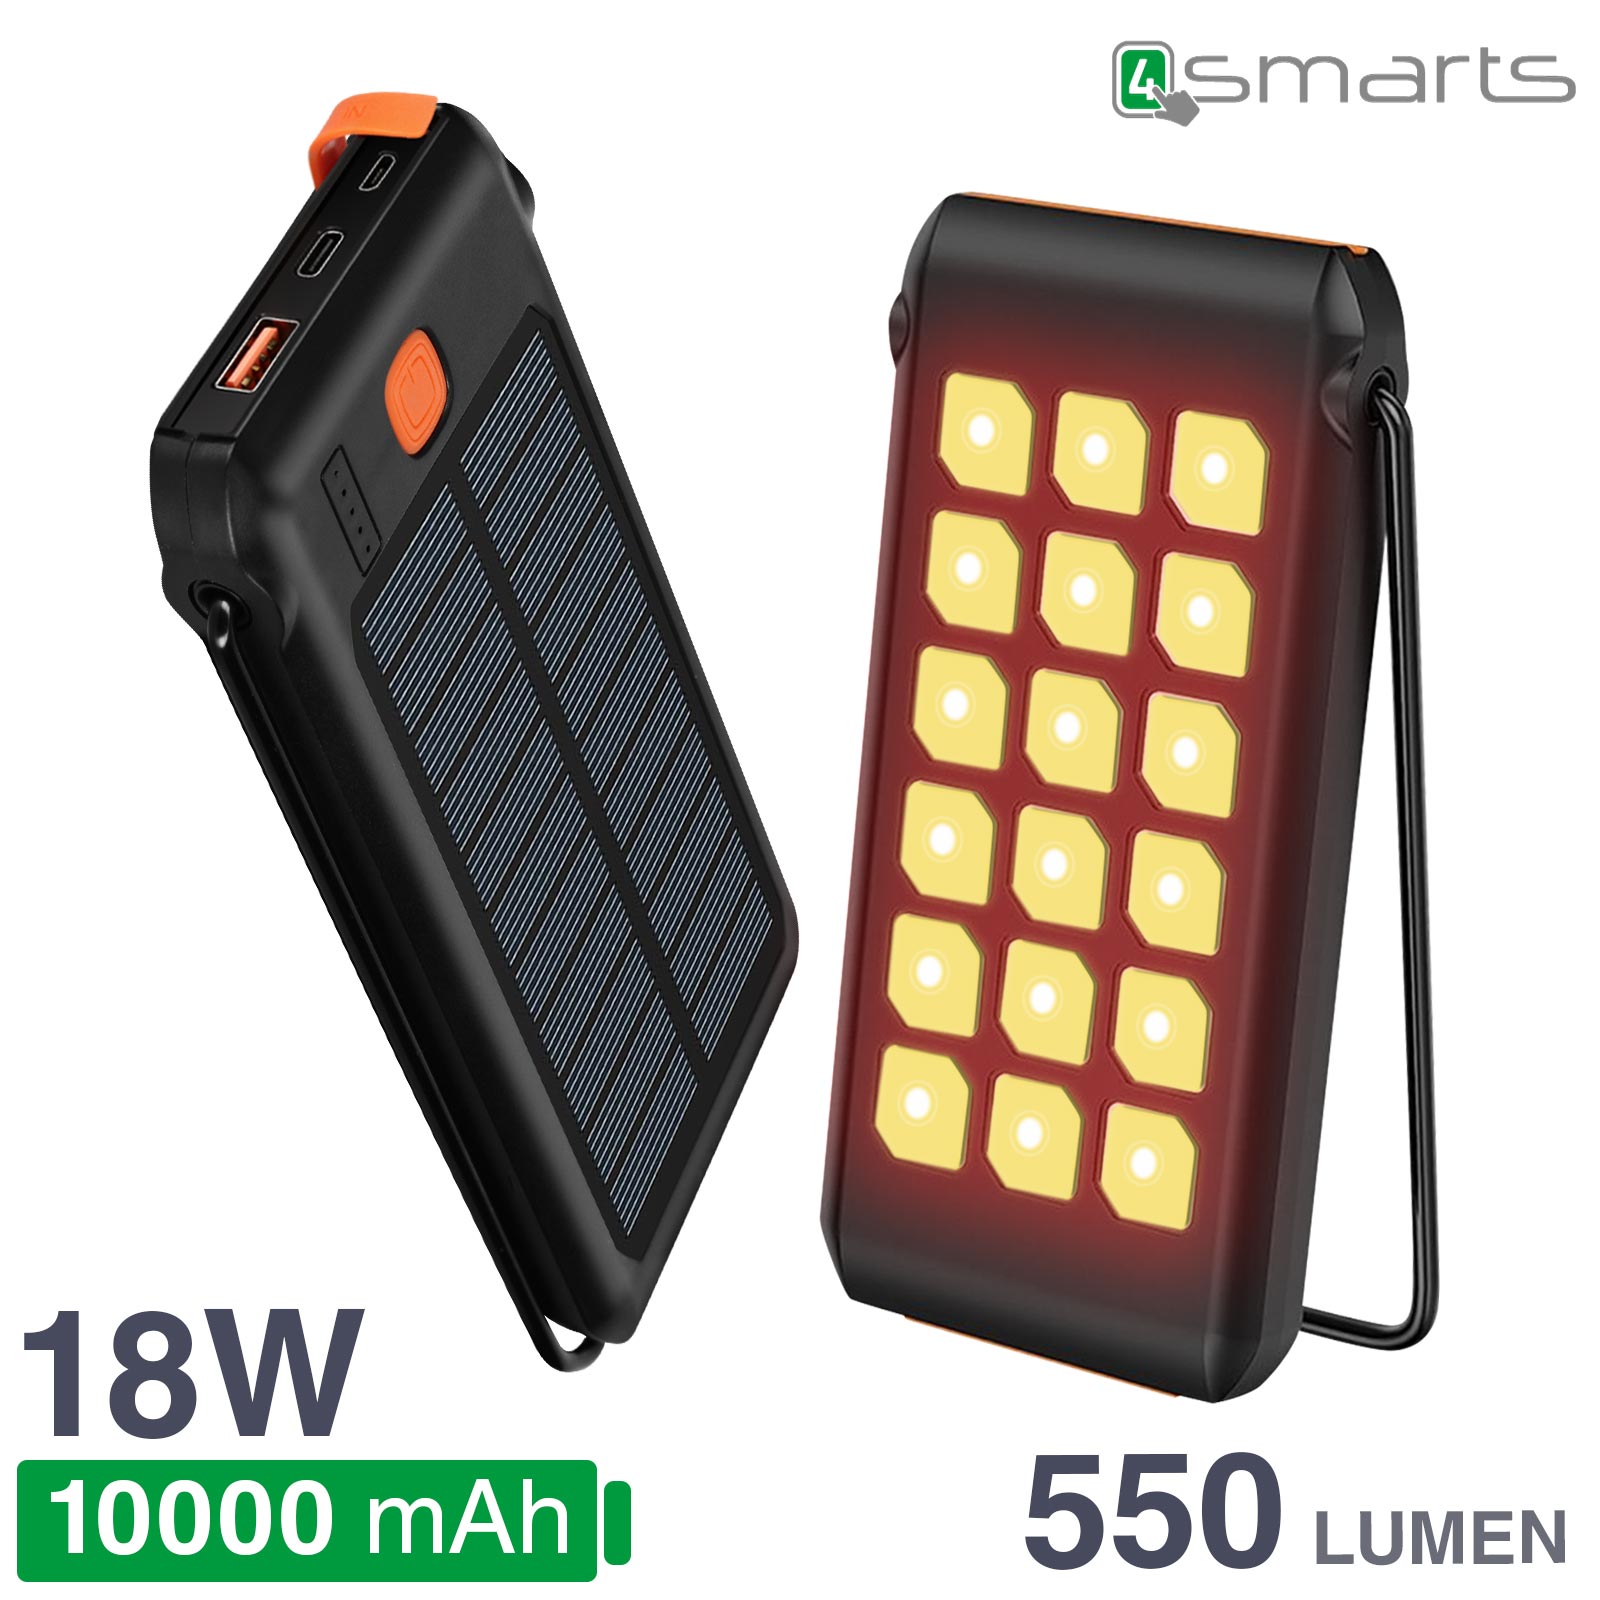 Powerbank Solare 10000 mAh, Fast Charge 3.0 18W, Doppia Uscita USB / USB-C  - 4smarts TitanPack Flex - Italiano